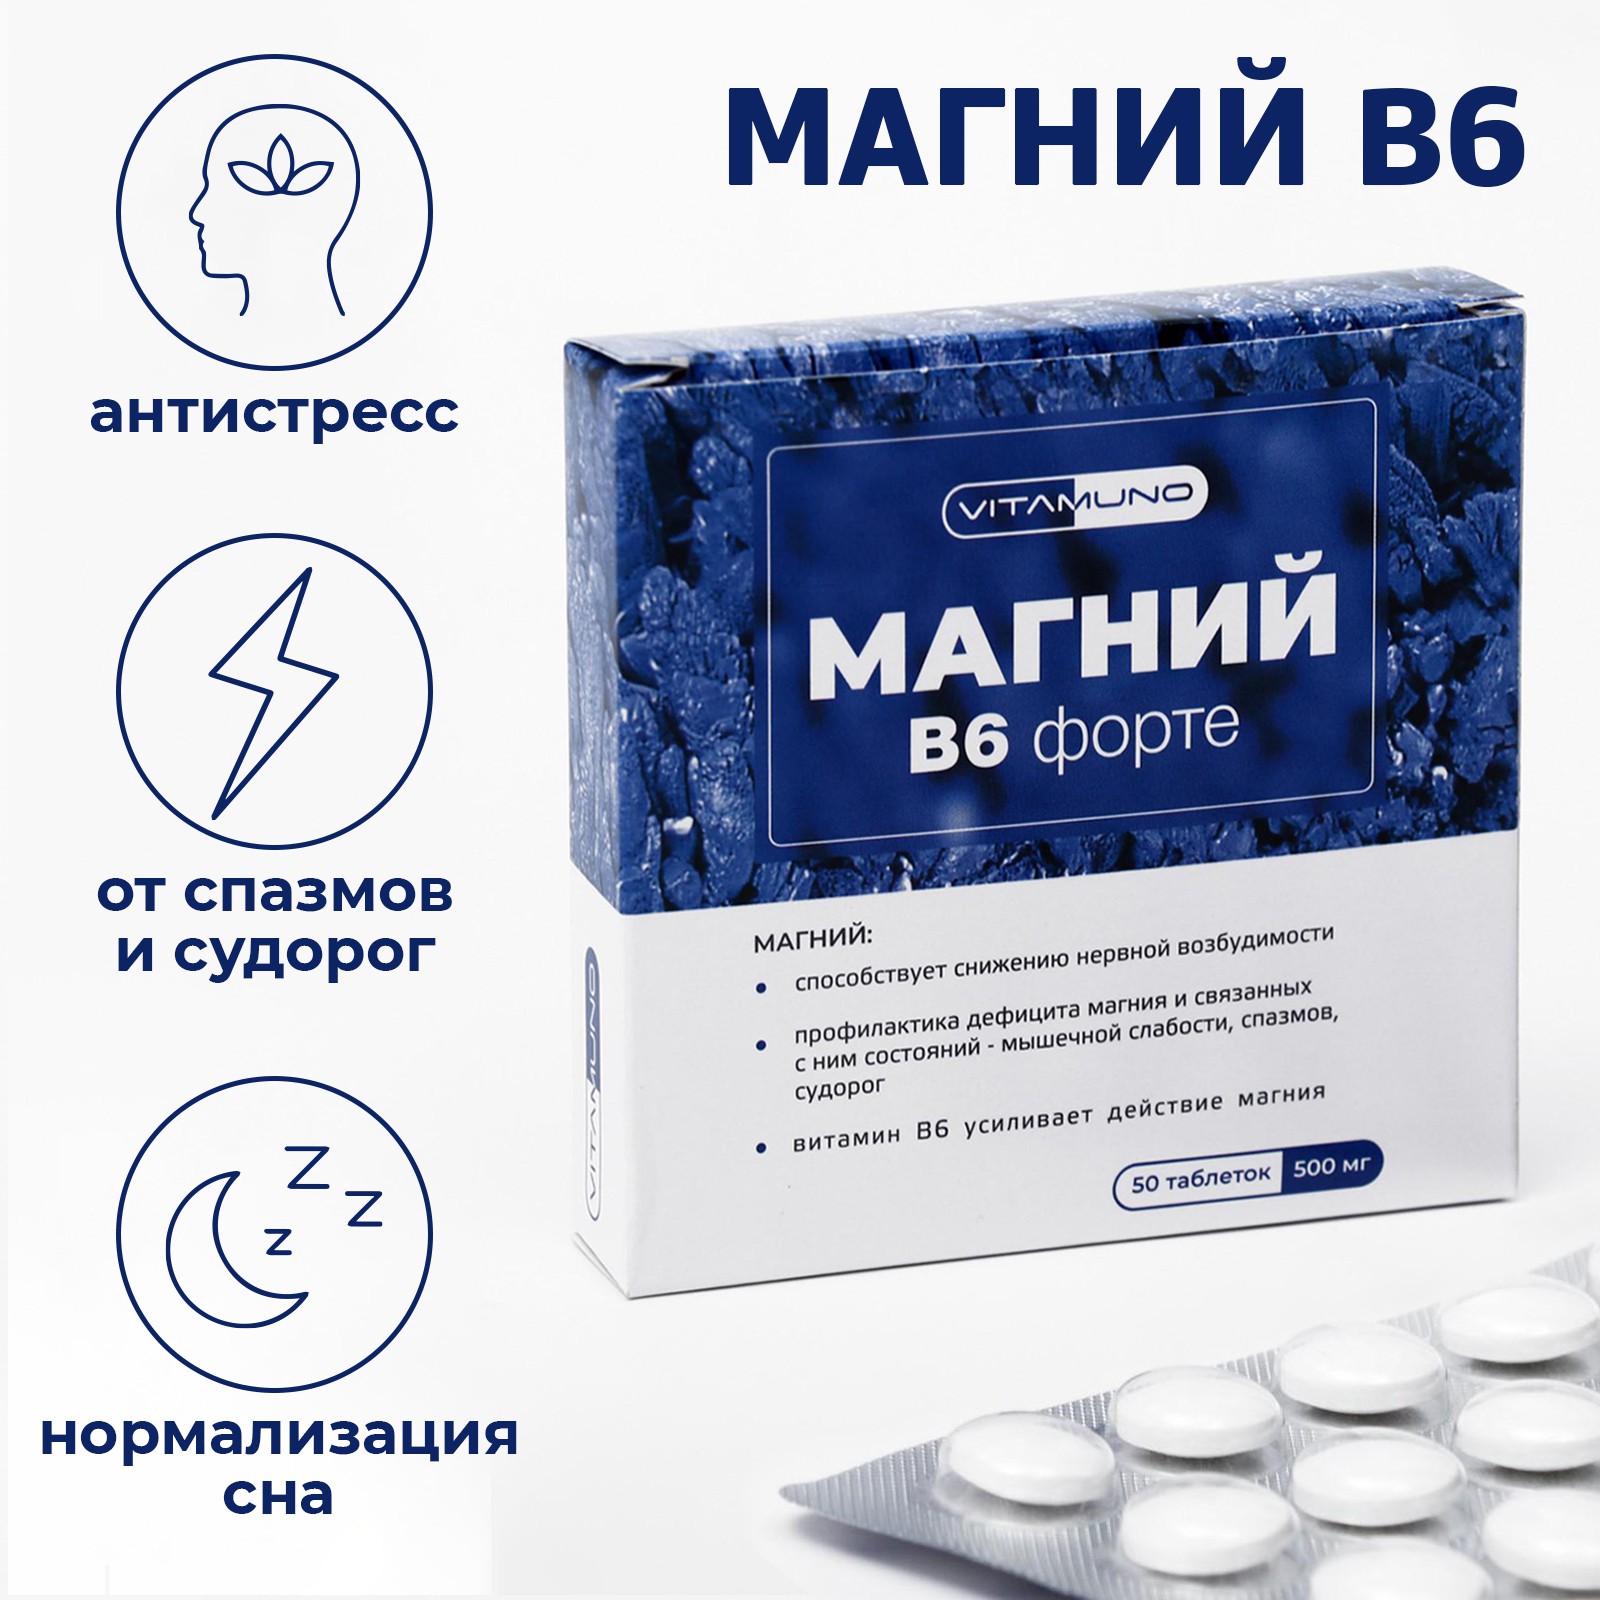 Магний B6 форте Vitamuno таблетки 500 мг 50 шт.